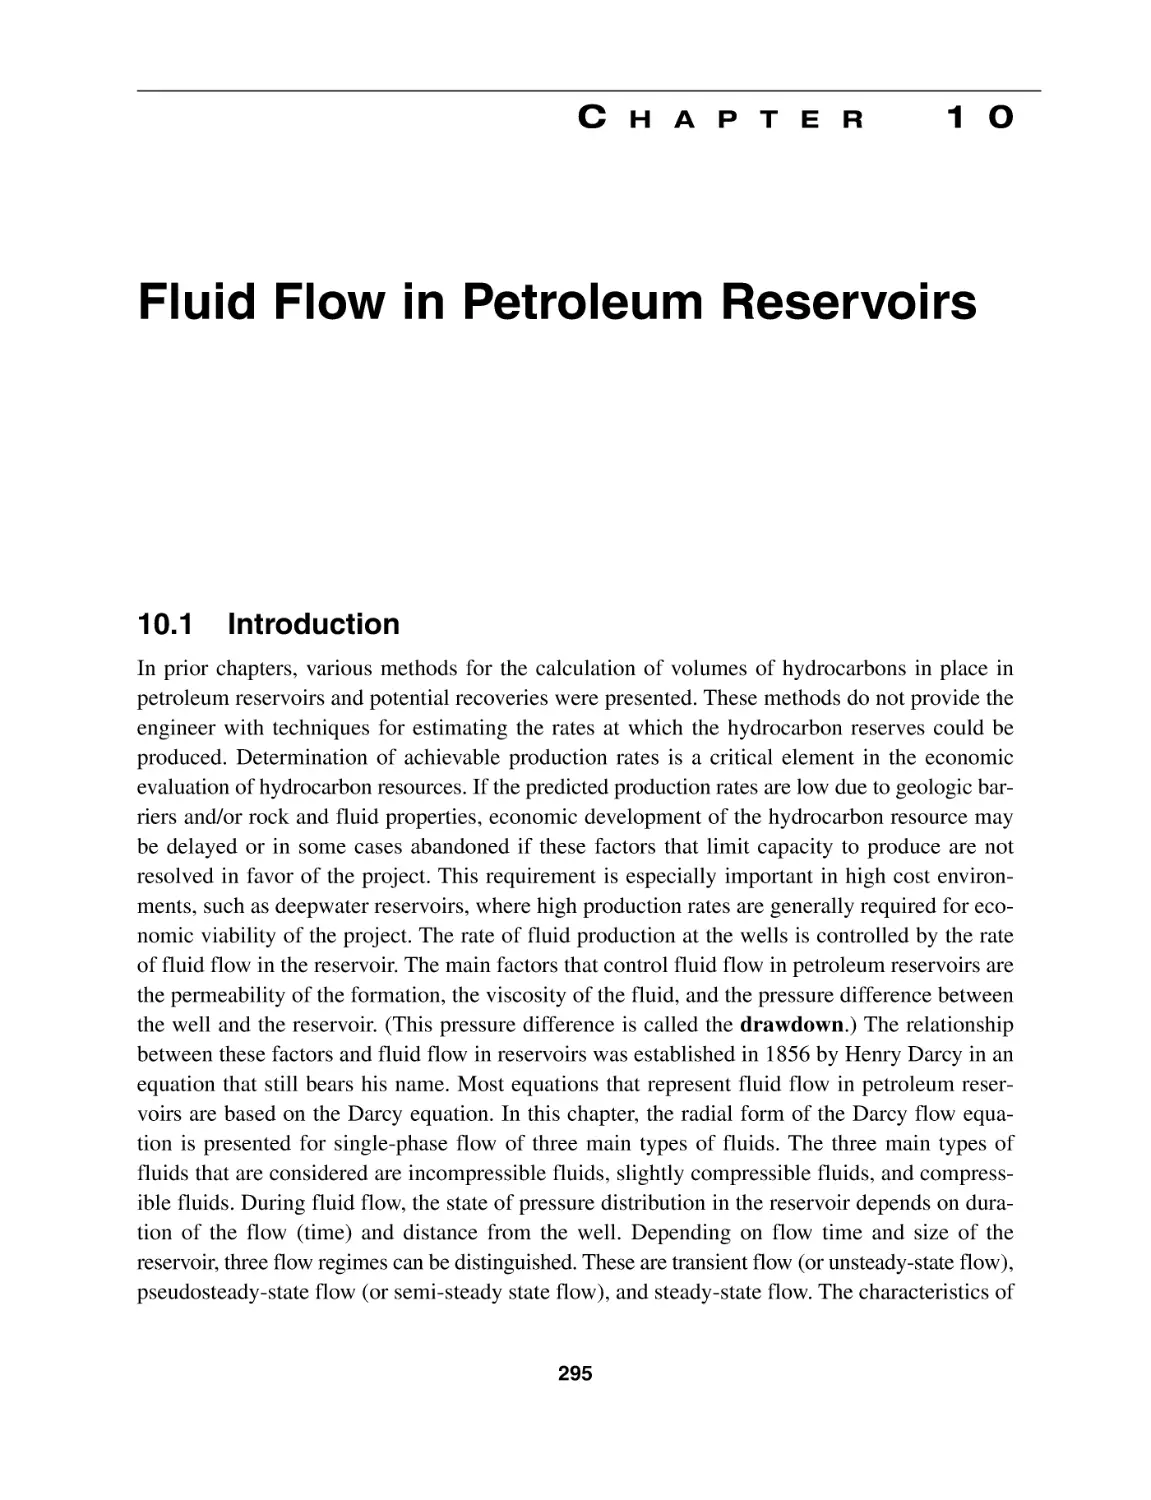 Chapter 10 Fluid Flow in Petroleum Reservoirs
10.1 Introduction